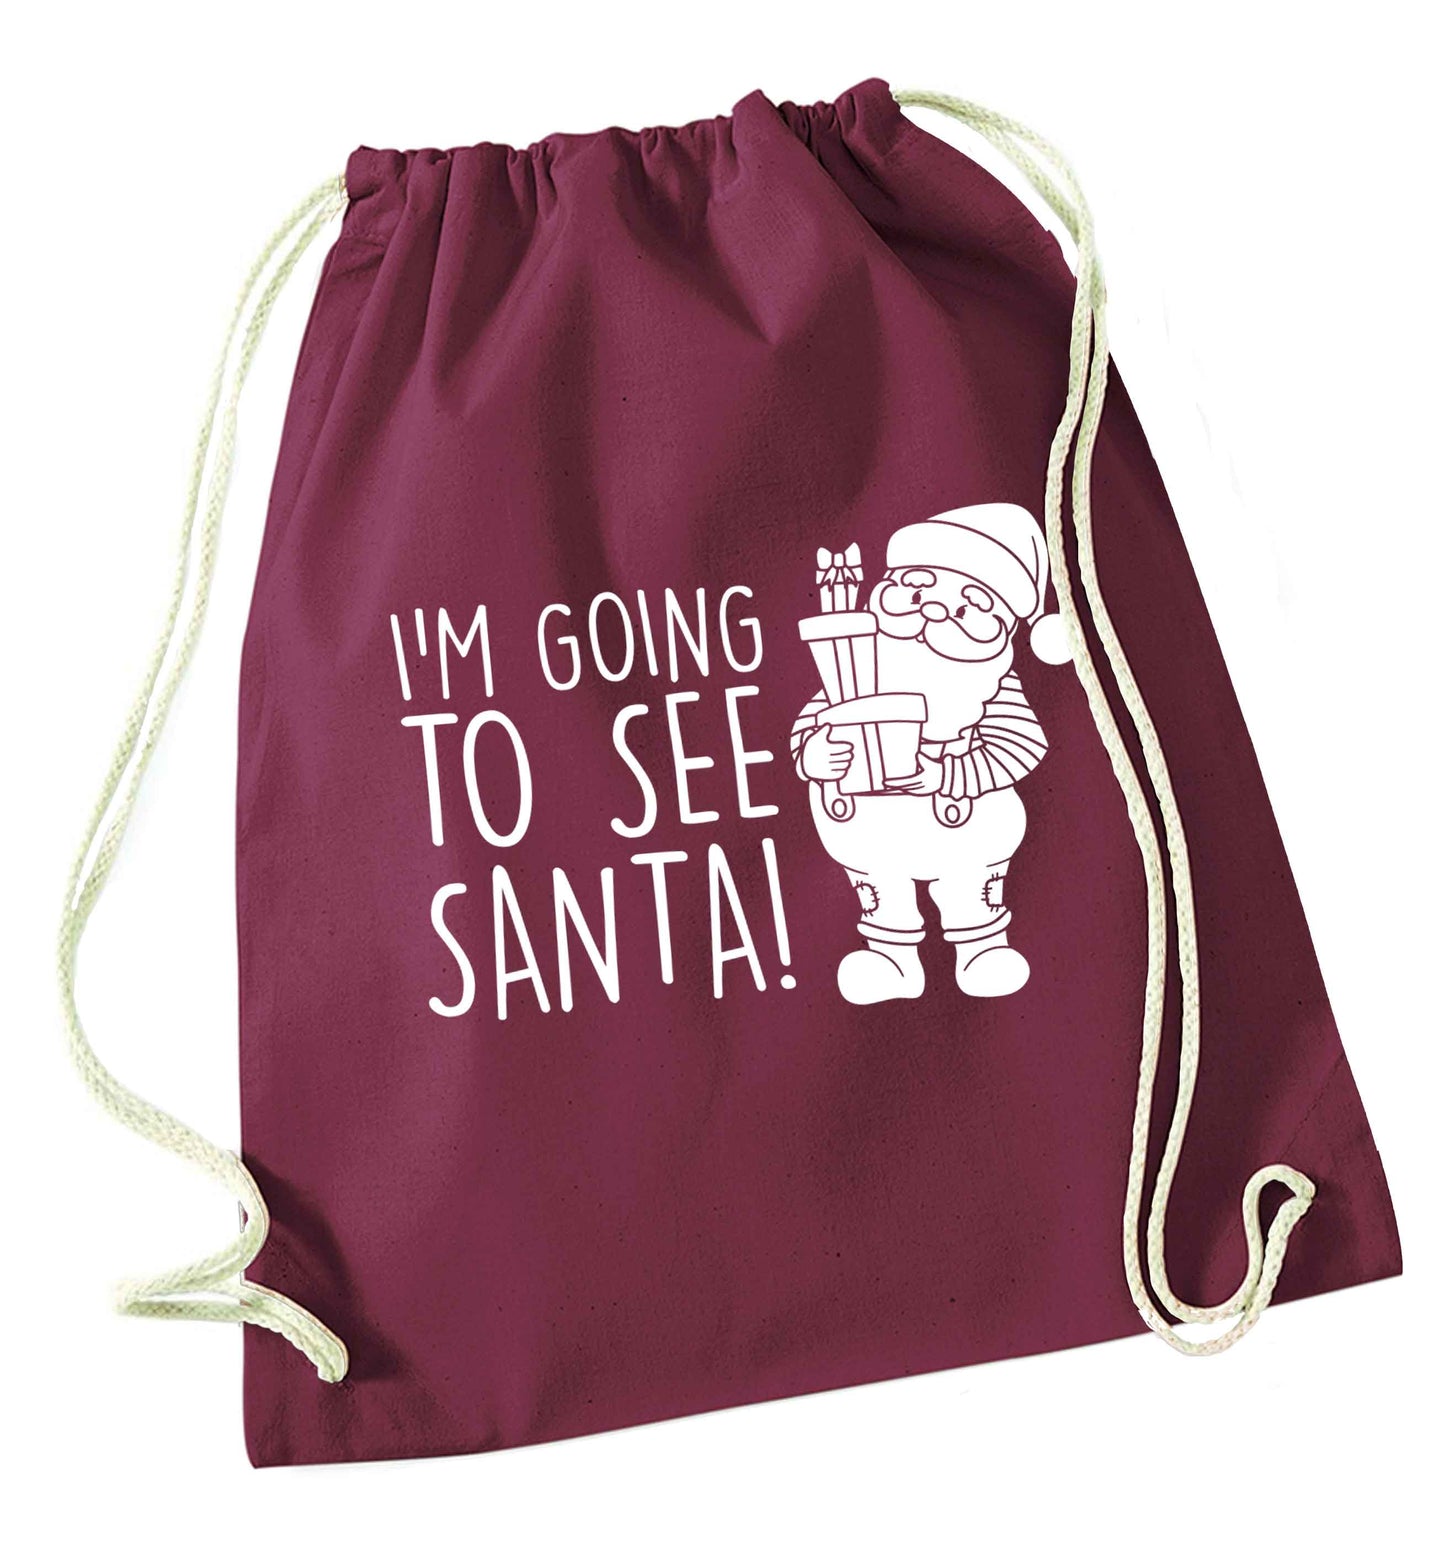 Merry Christmas maroon drawstring bag